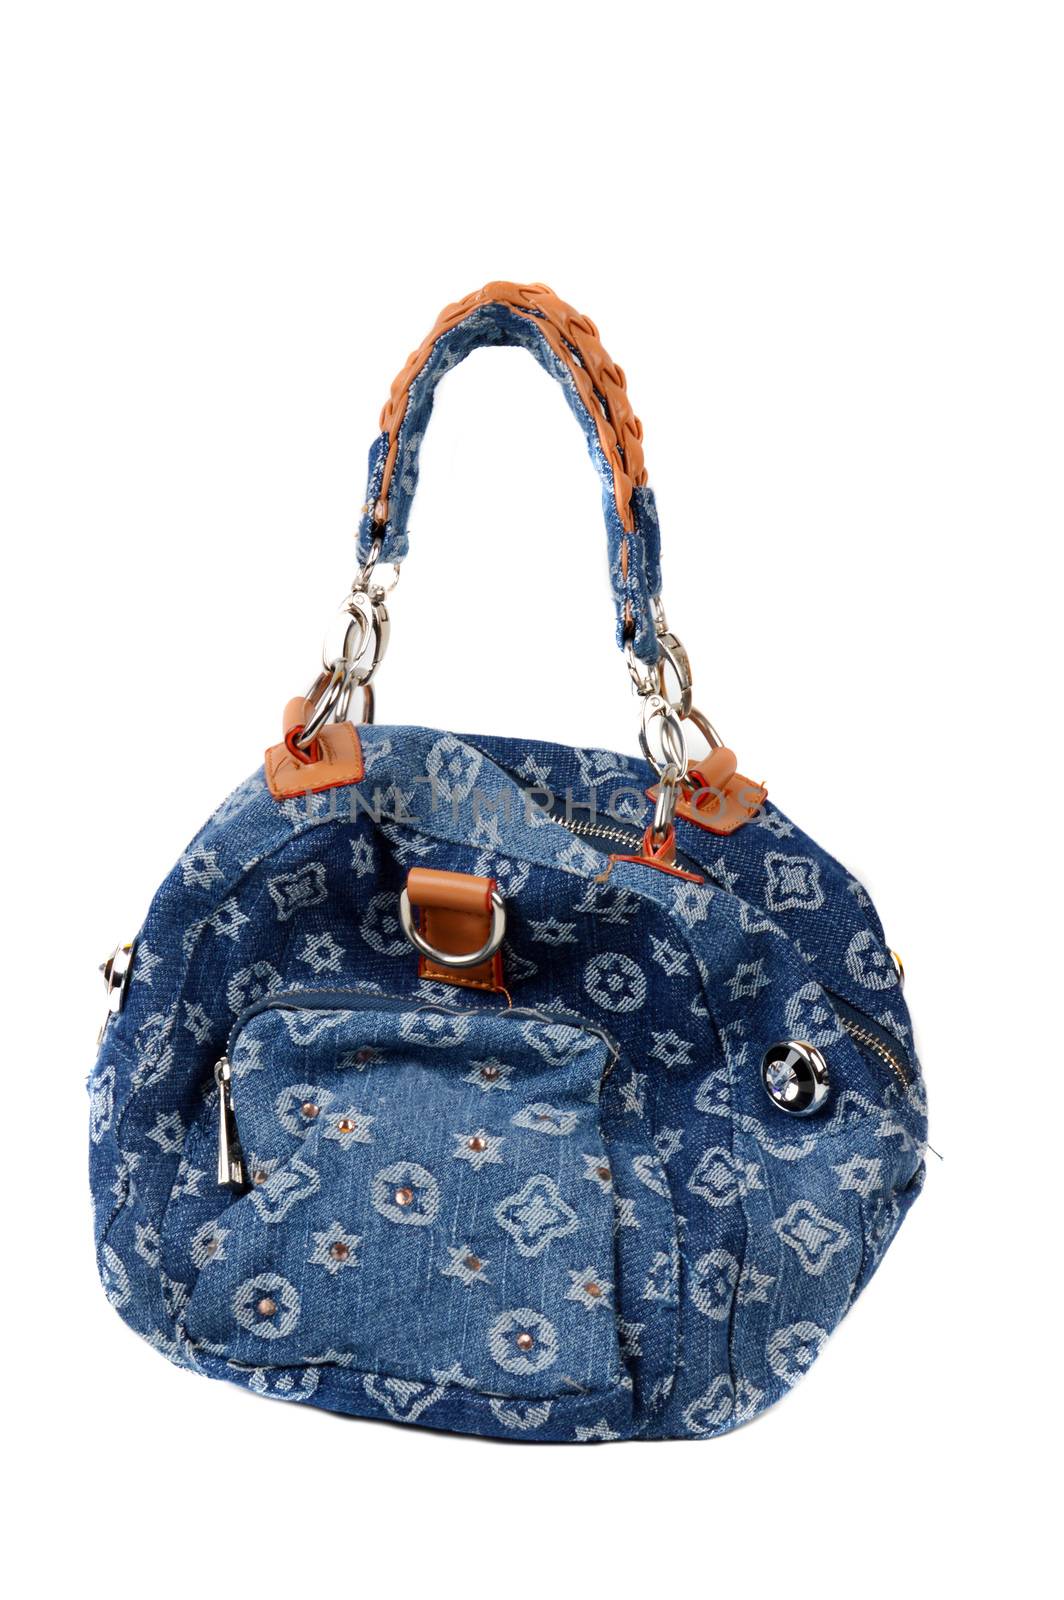 blue denim handbag by antonihalim